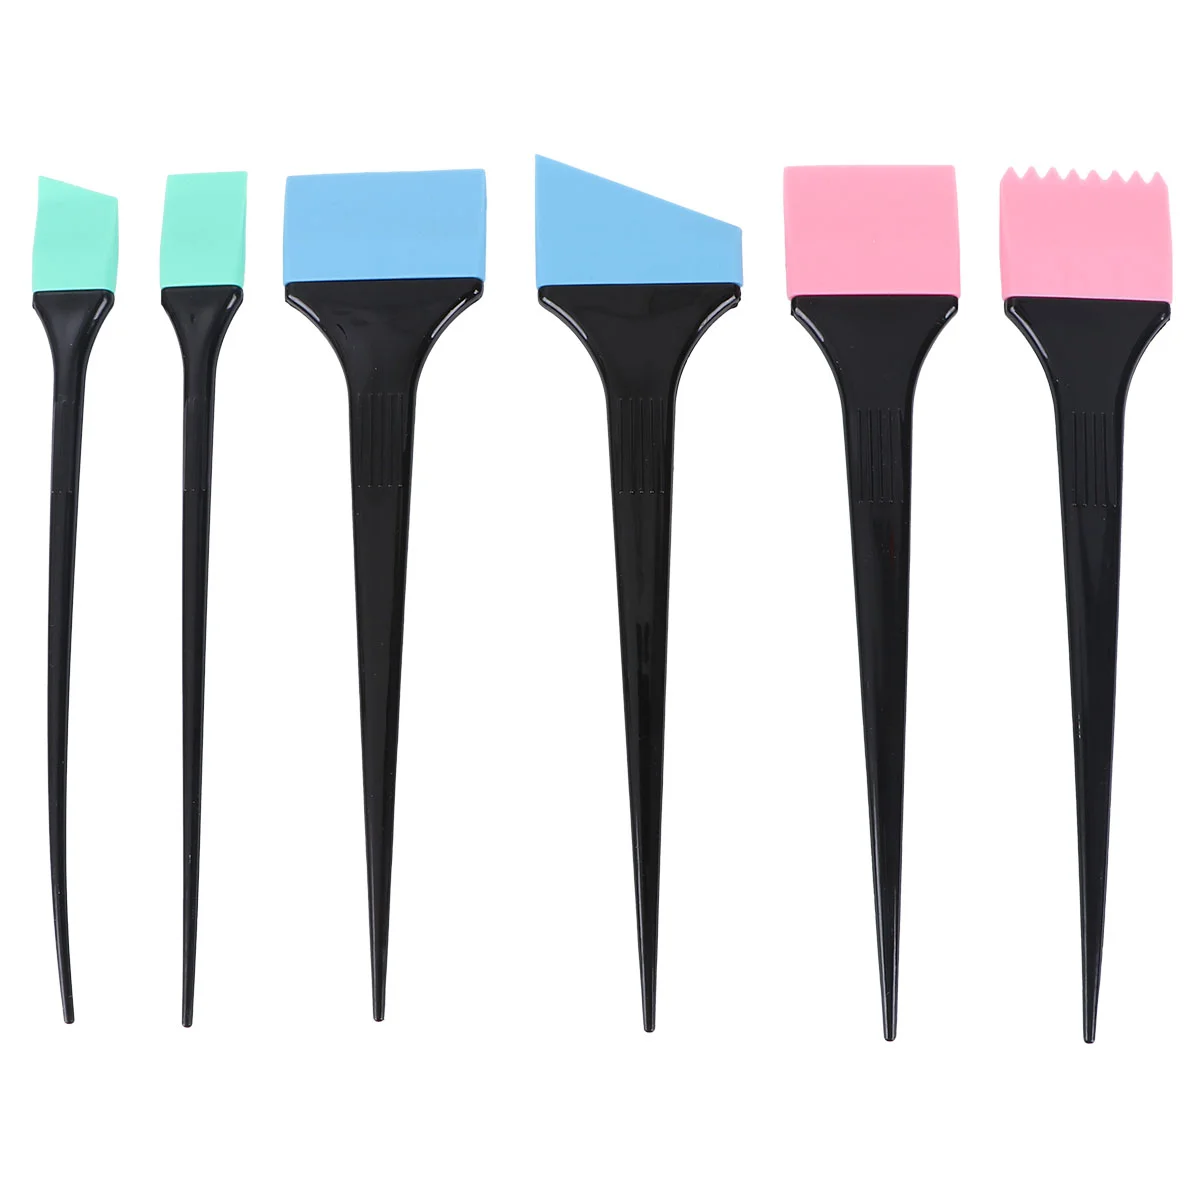 Silicone Hair Coloring Brush Set, 6PCS/ Set Silicone Tint Highlighting,